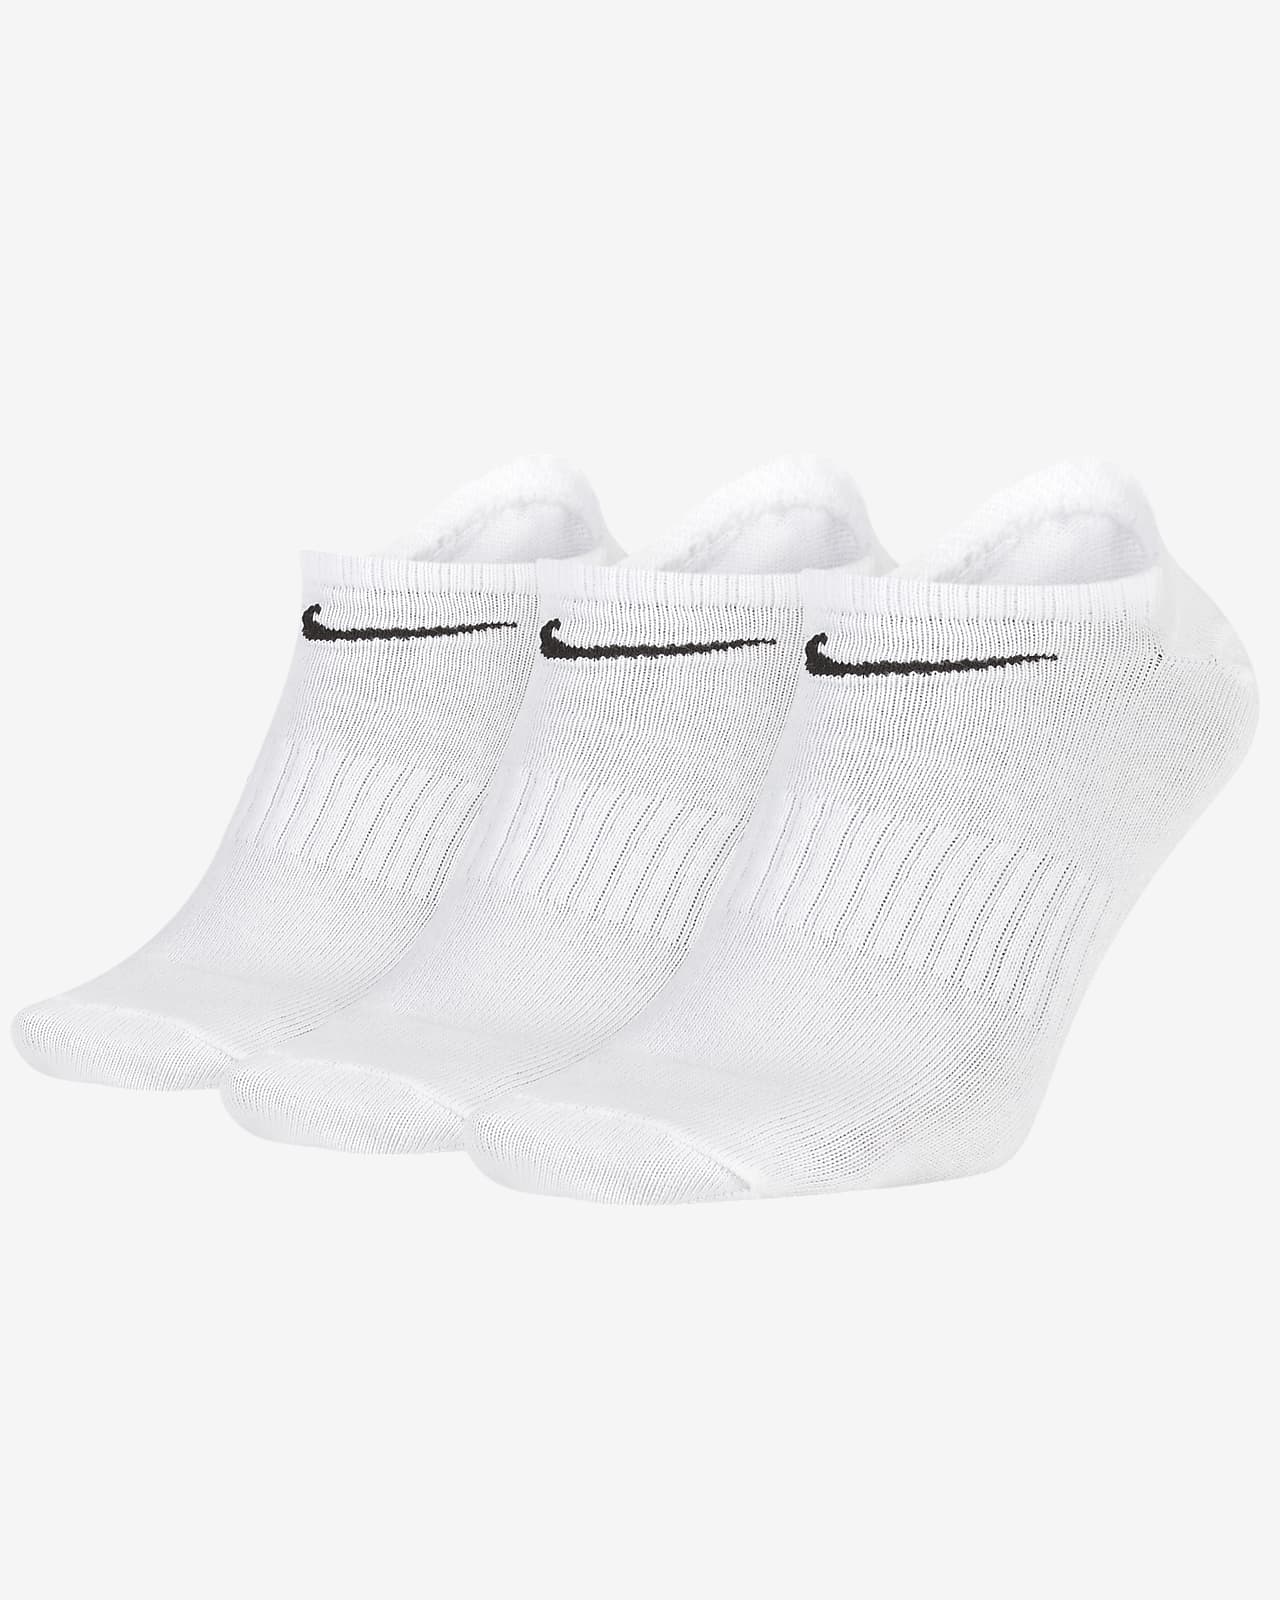 Calcetines invisibles de entrenamiento (3 pares) Nike Everyday Lightweight